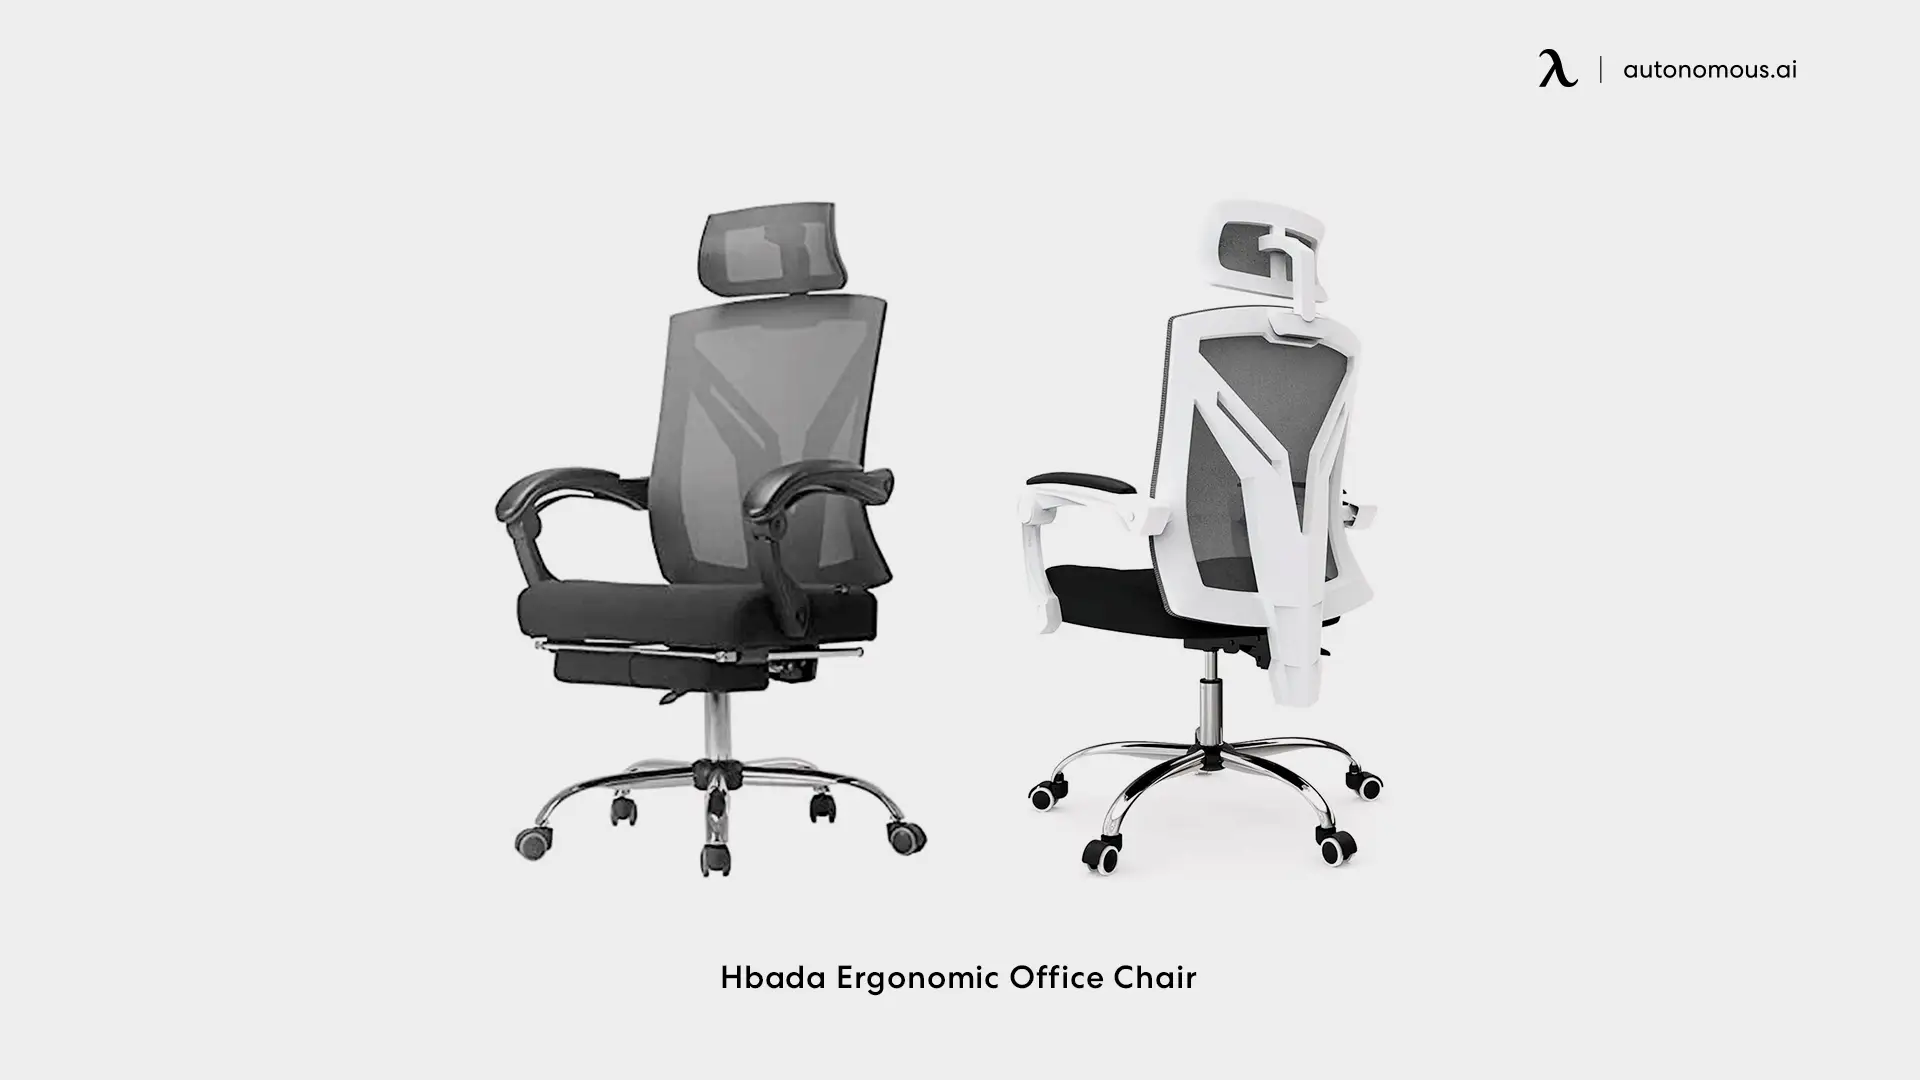 Hbada Ergonomic Office Chair - minimalist chair